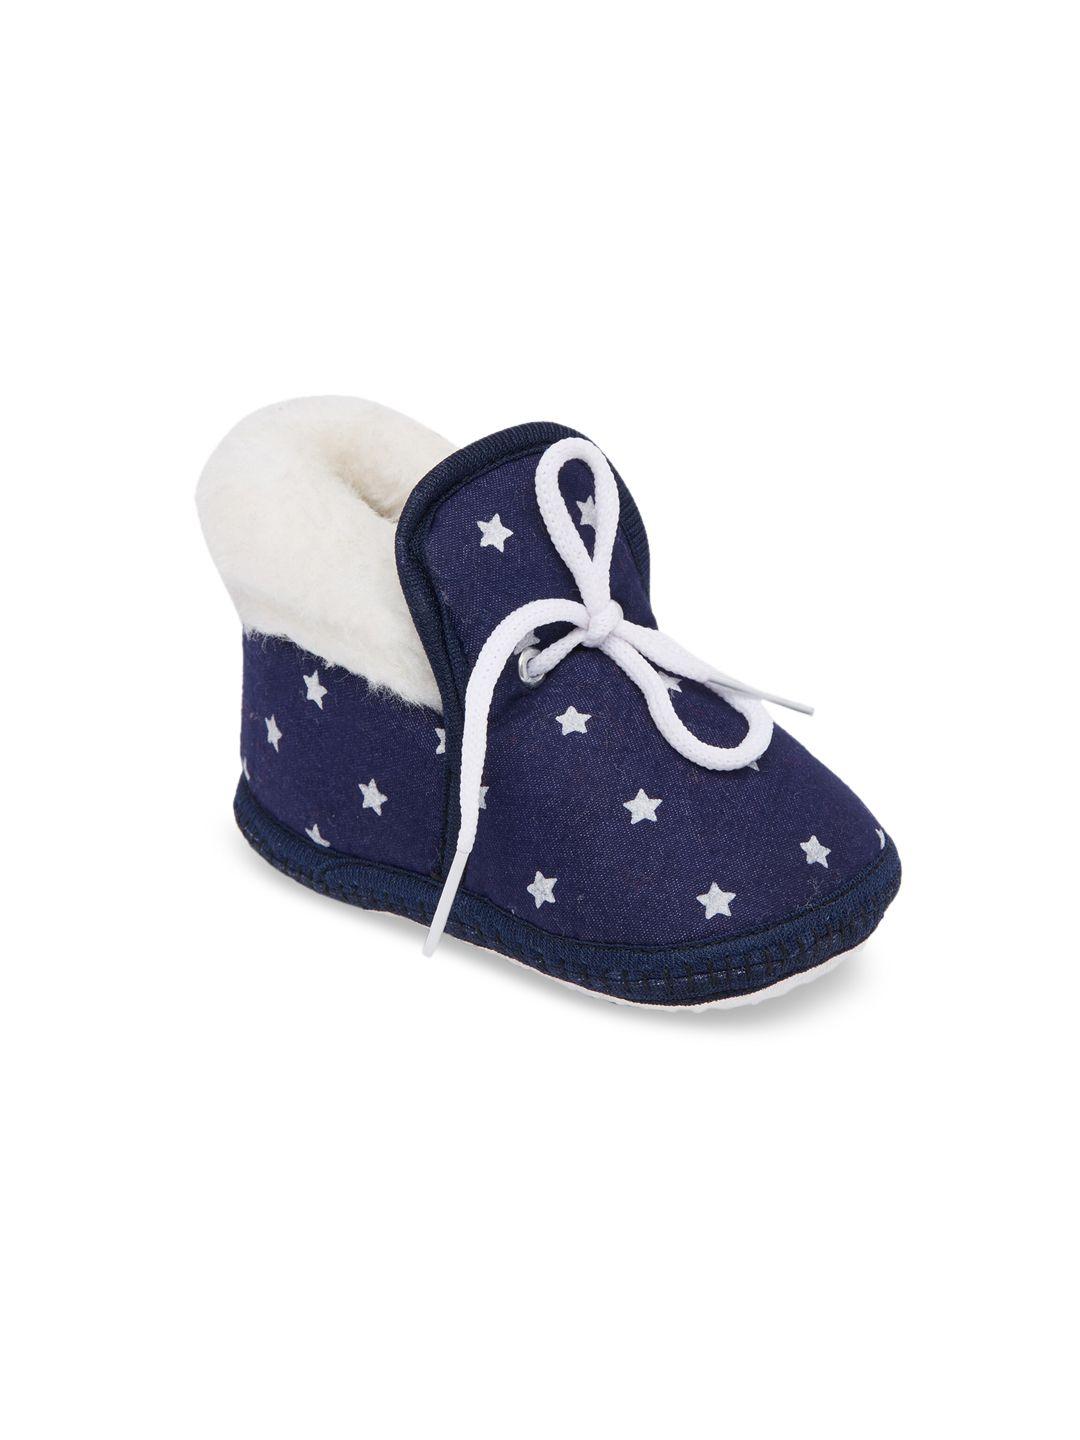 chiu infant kids navy blue & white printed booties